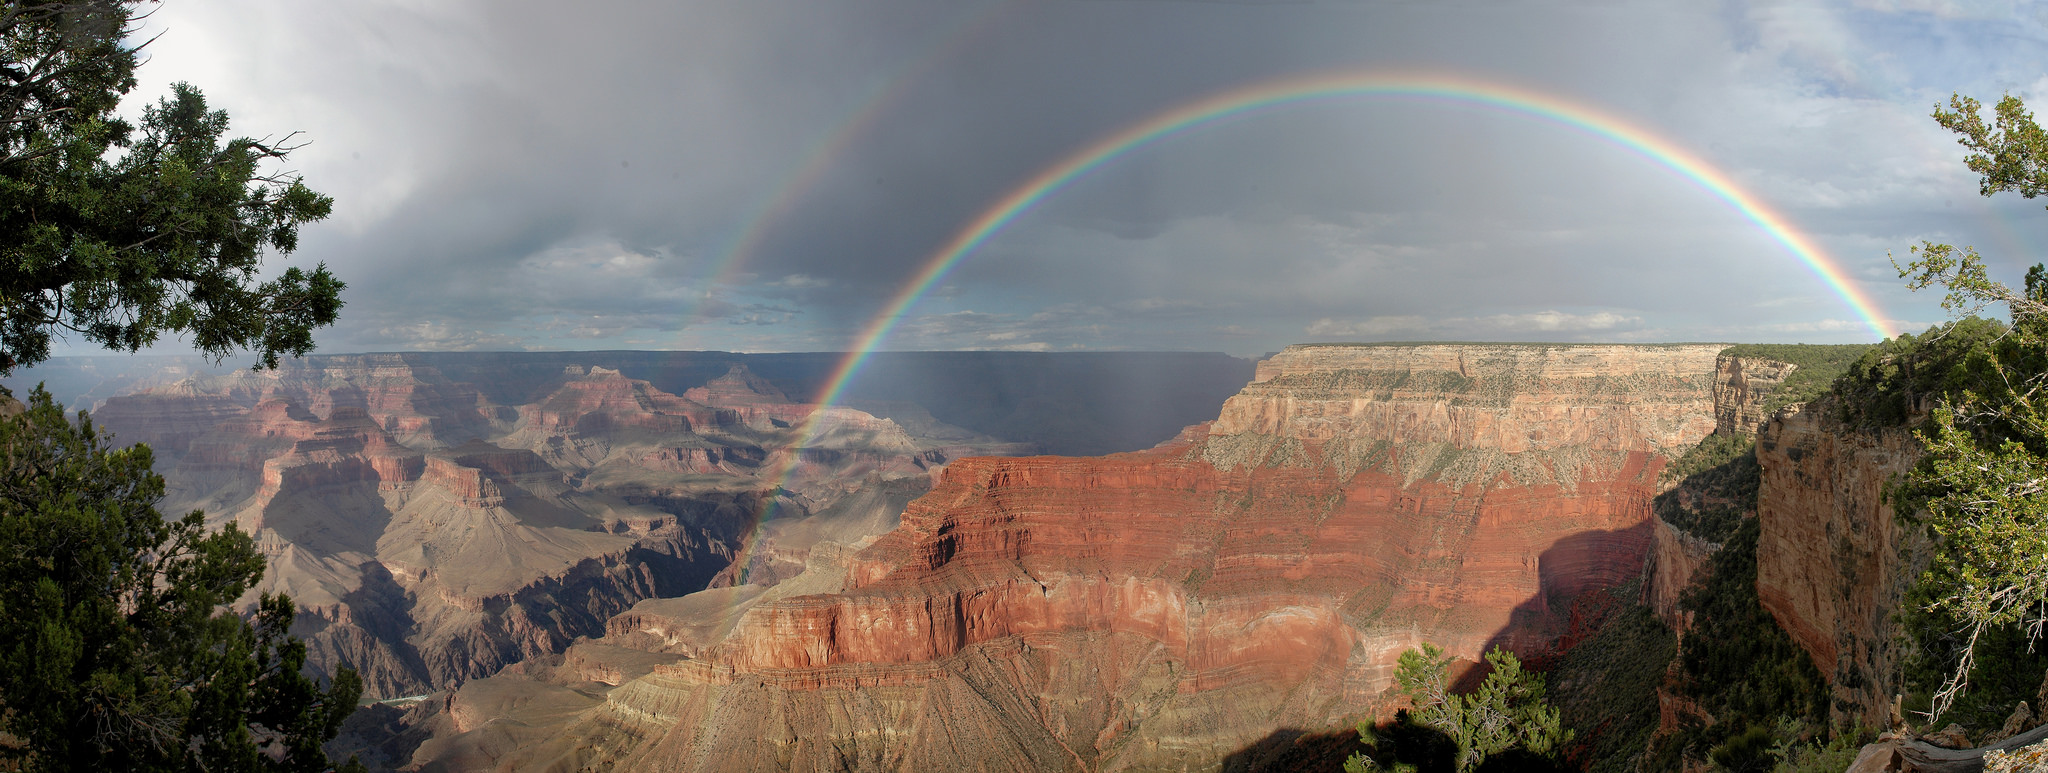 Grand Canyon National Park: Rainbow From Pima Point